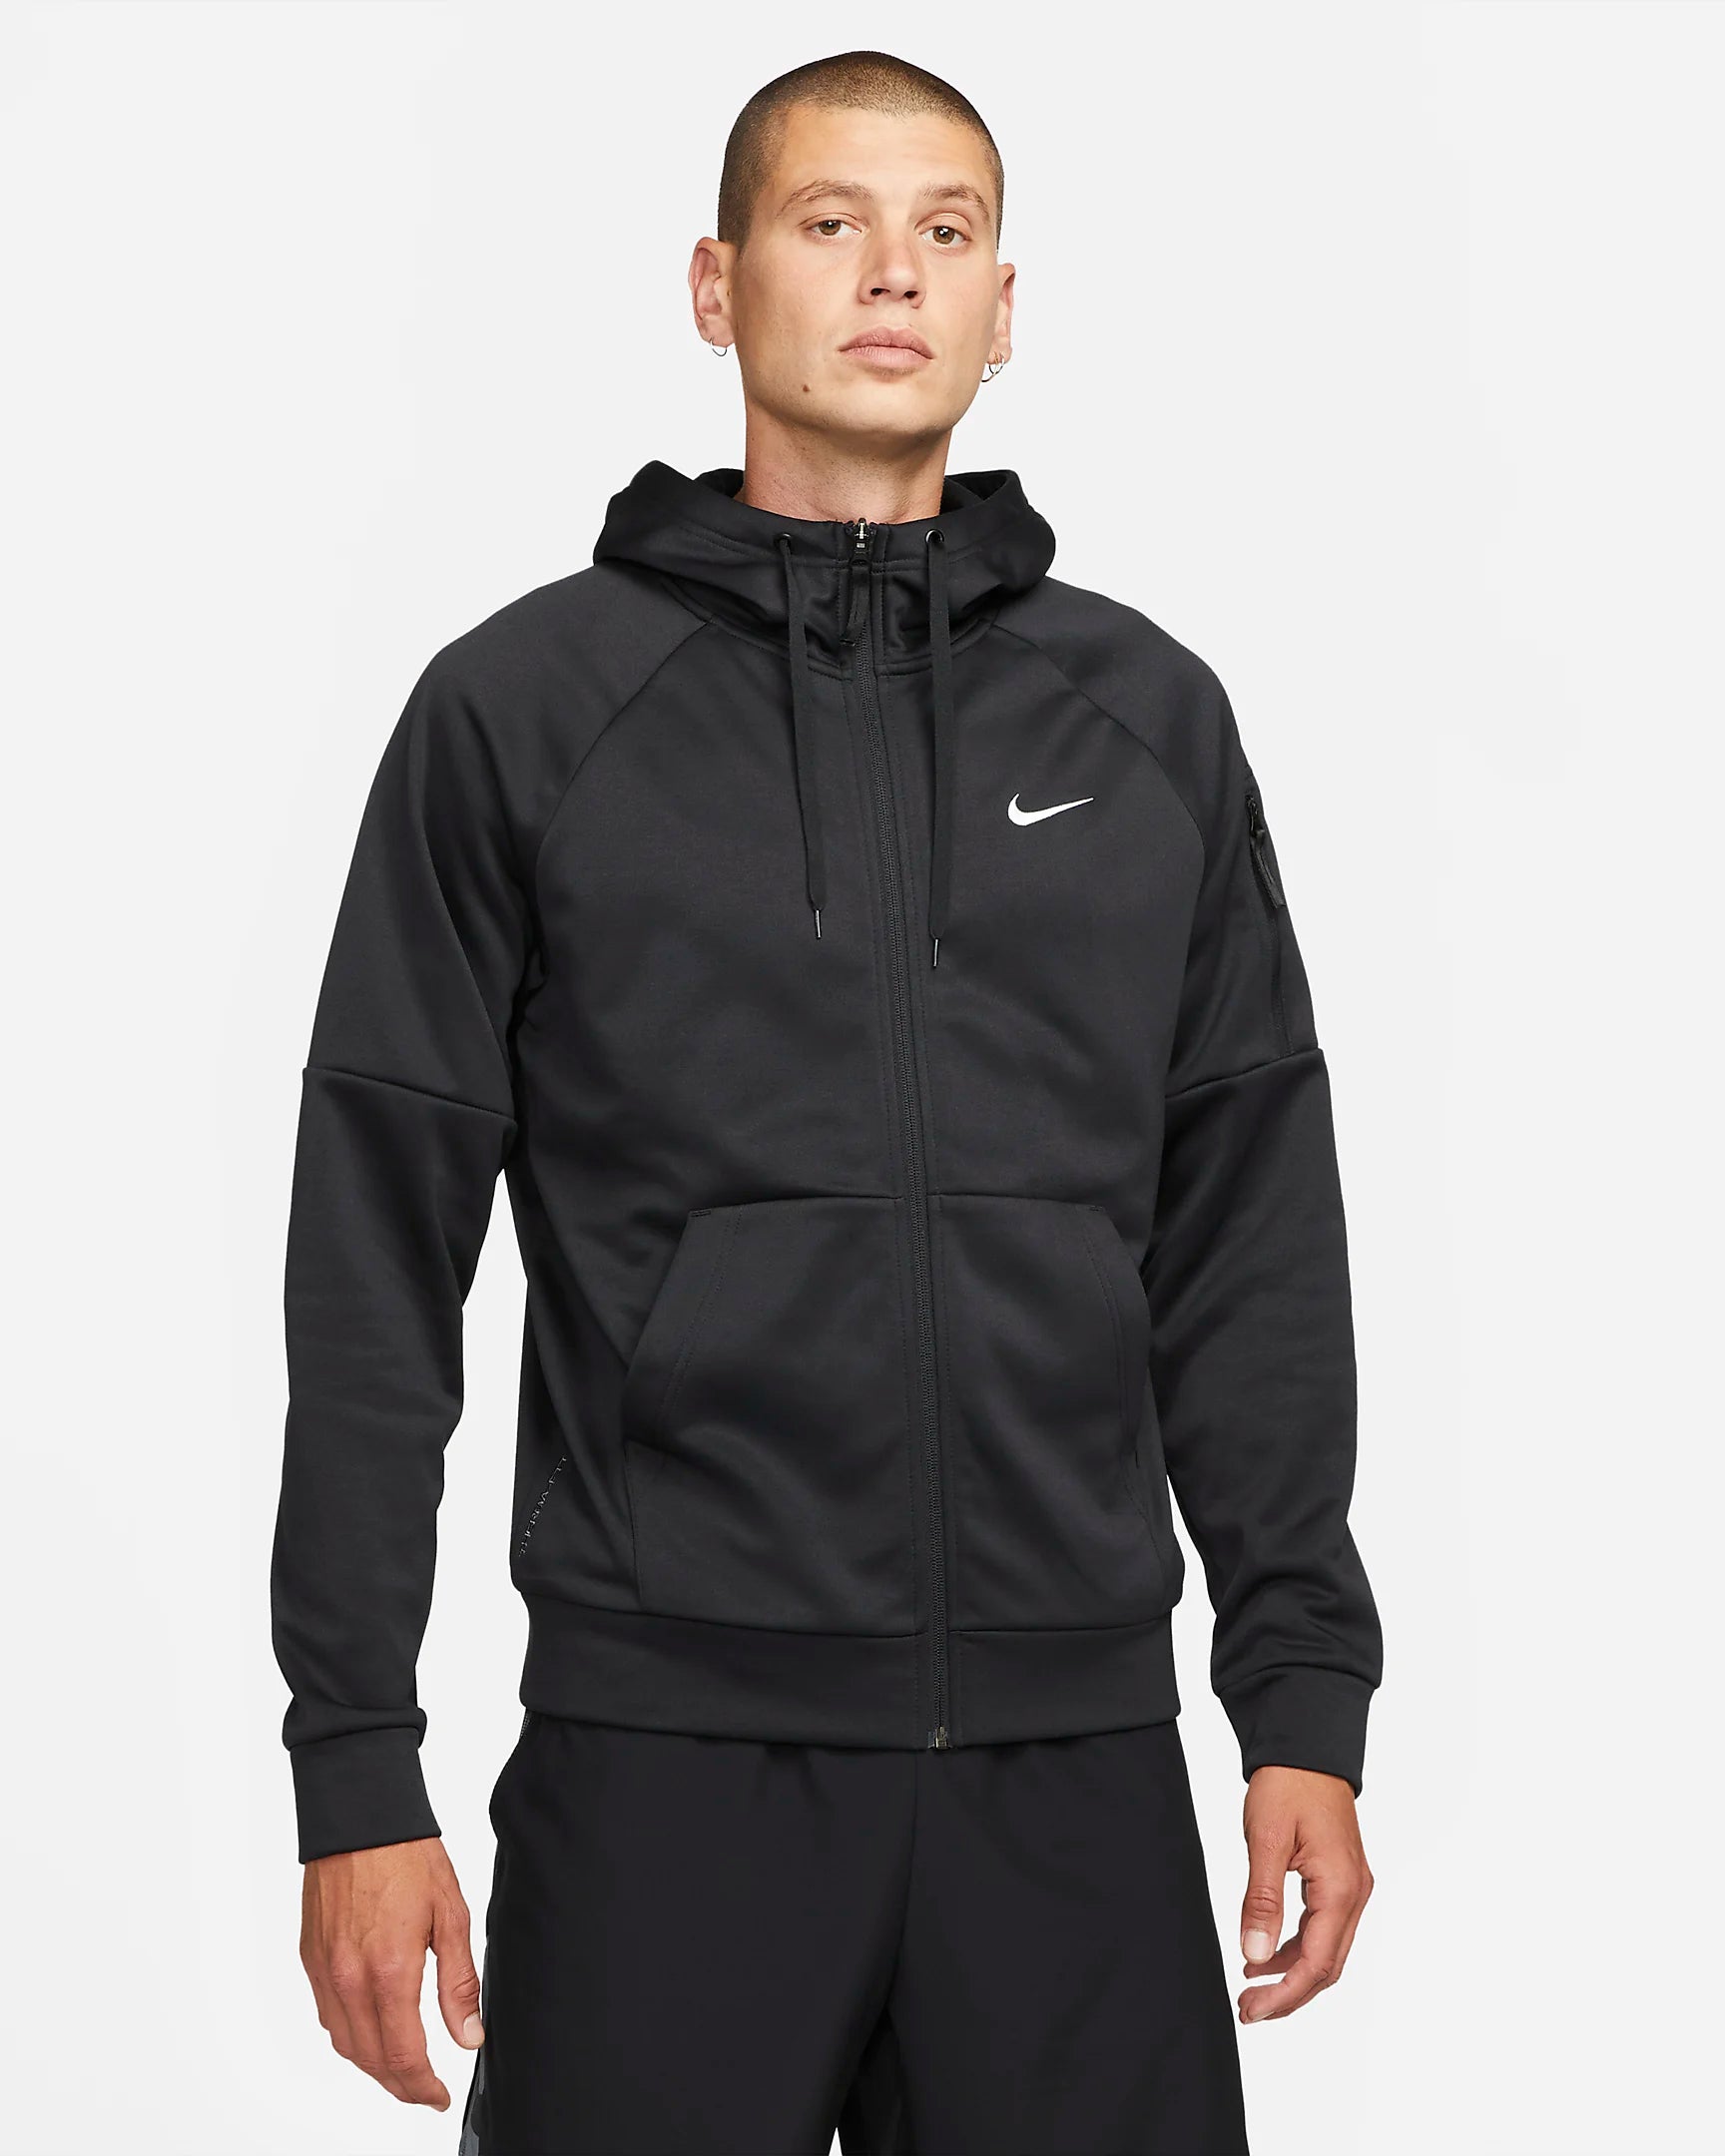 Nike Therma Jacket - Fit - Black